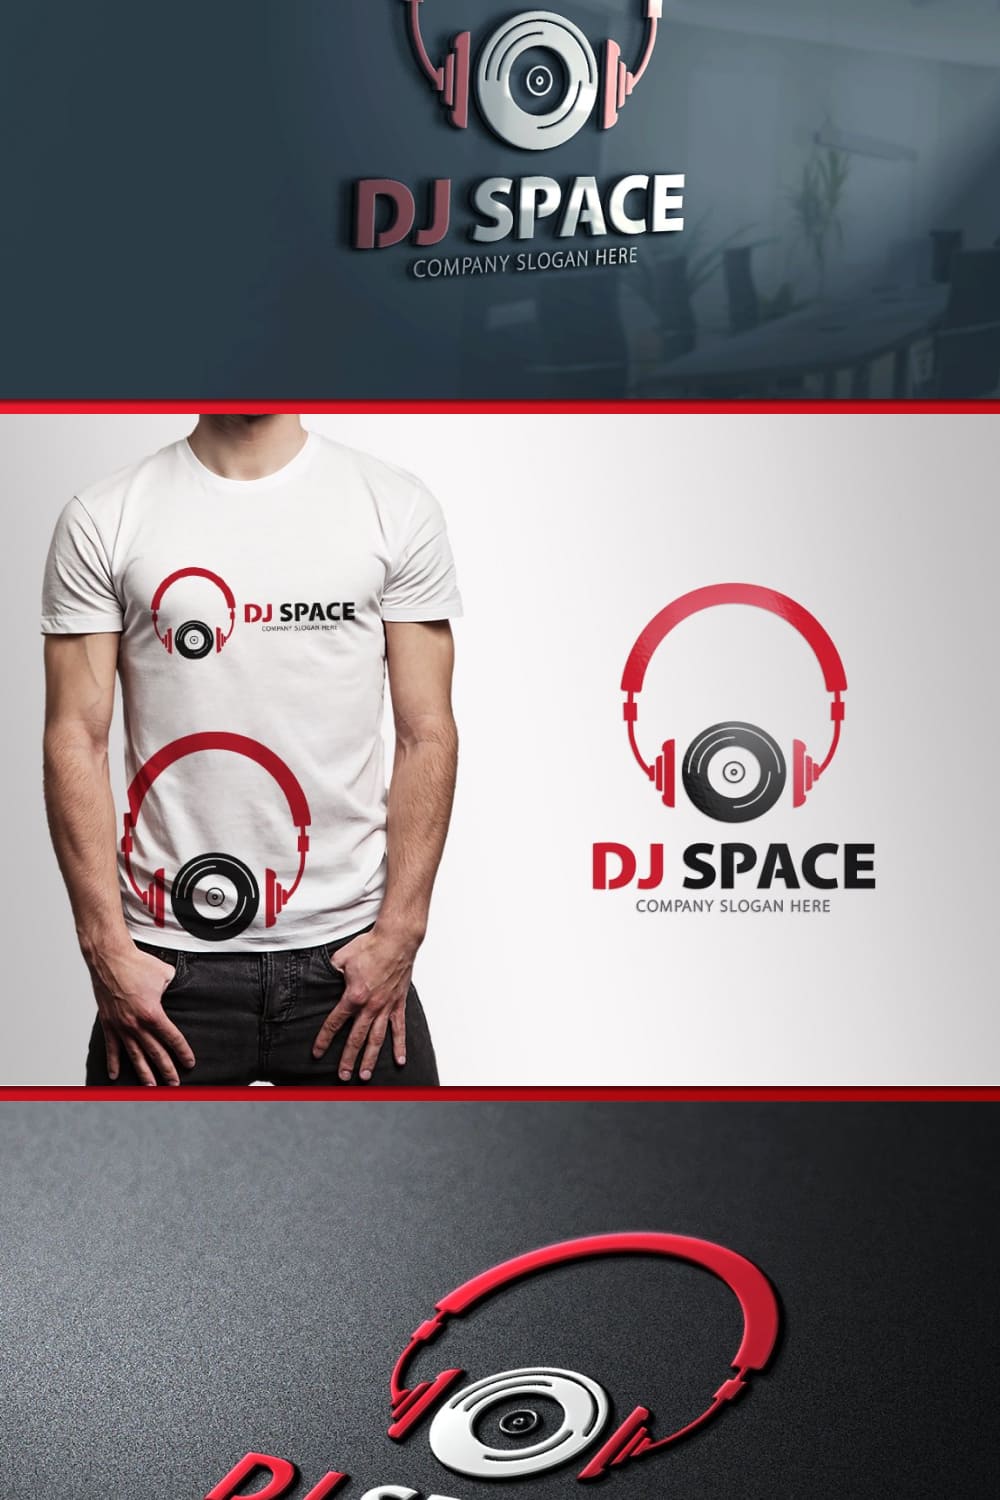 dj space logo music logo templates.